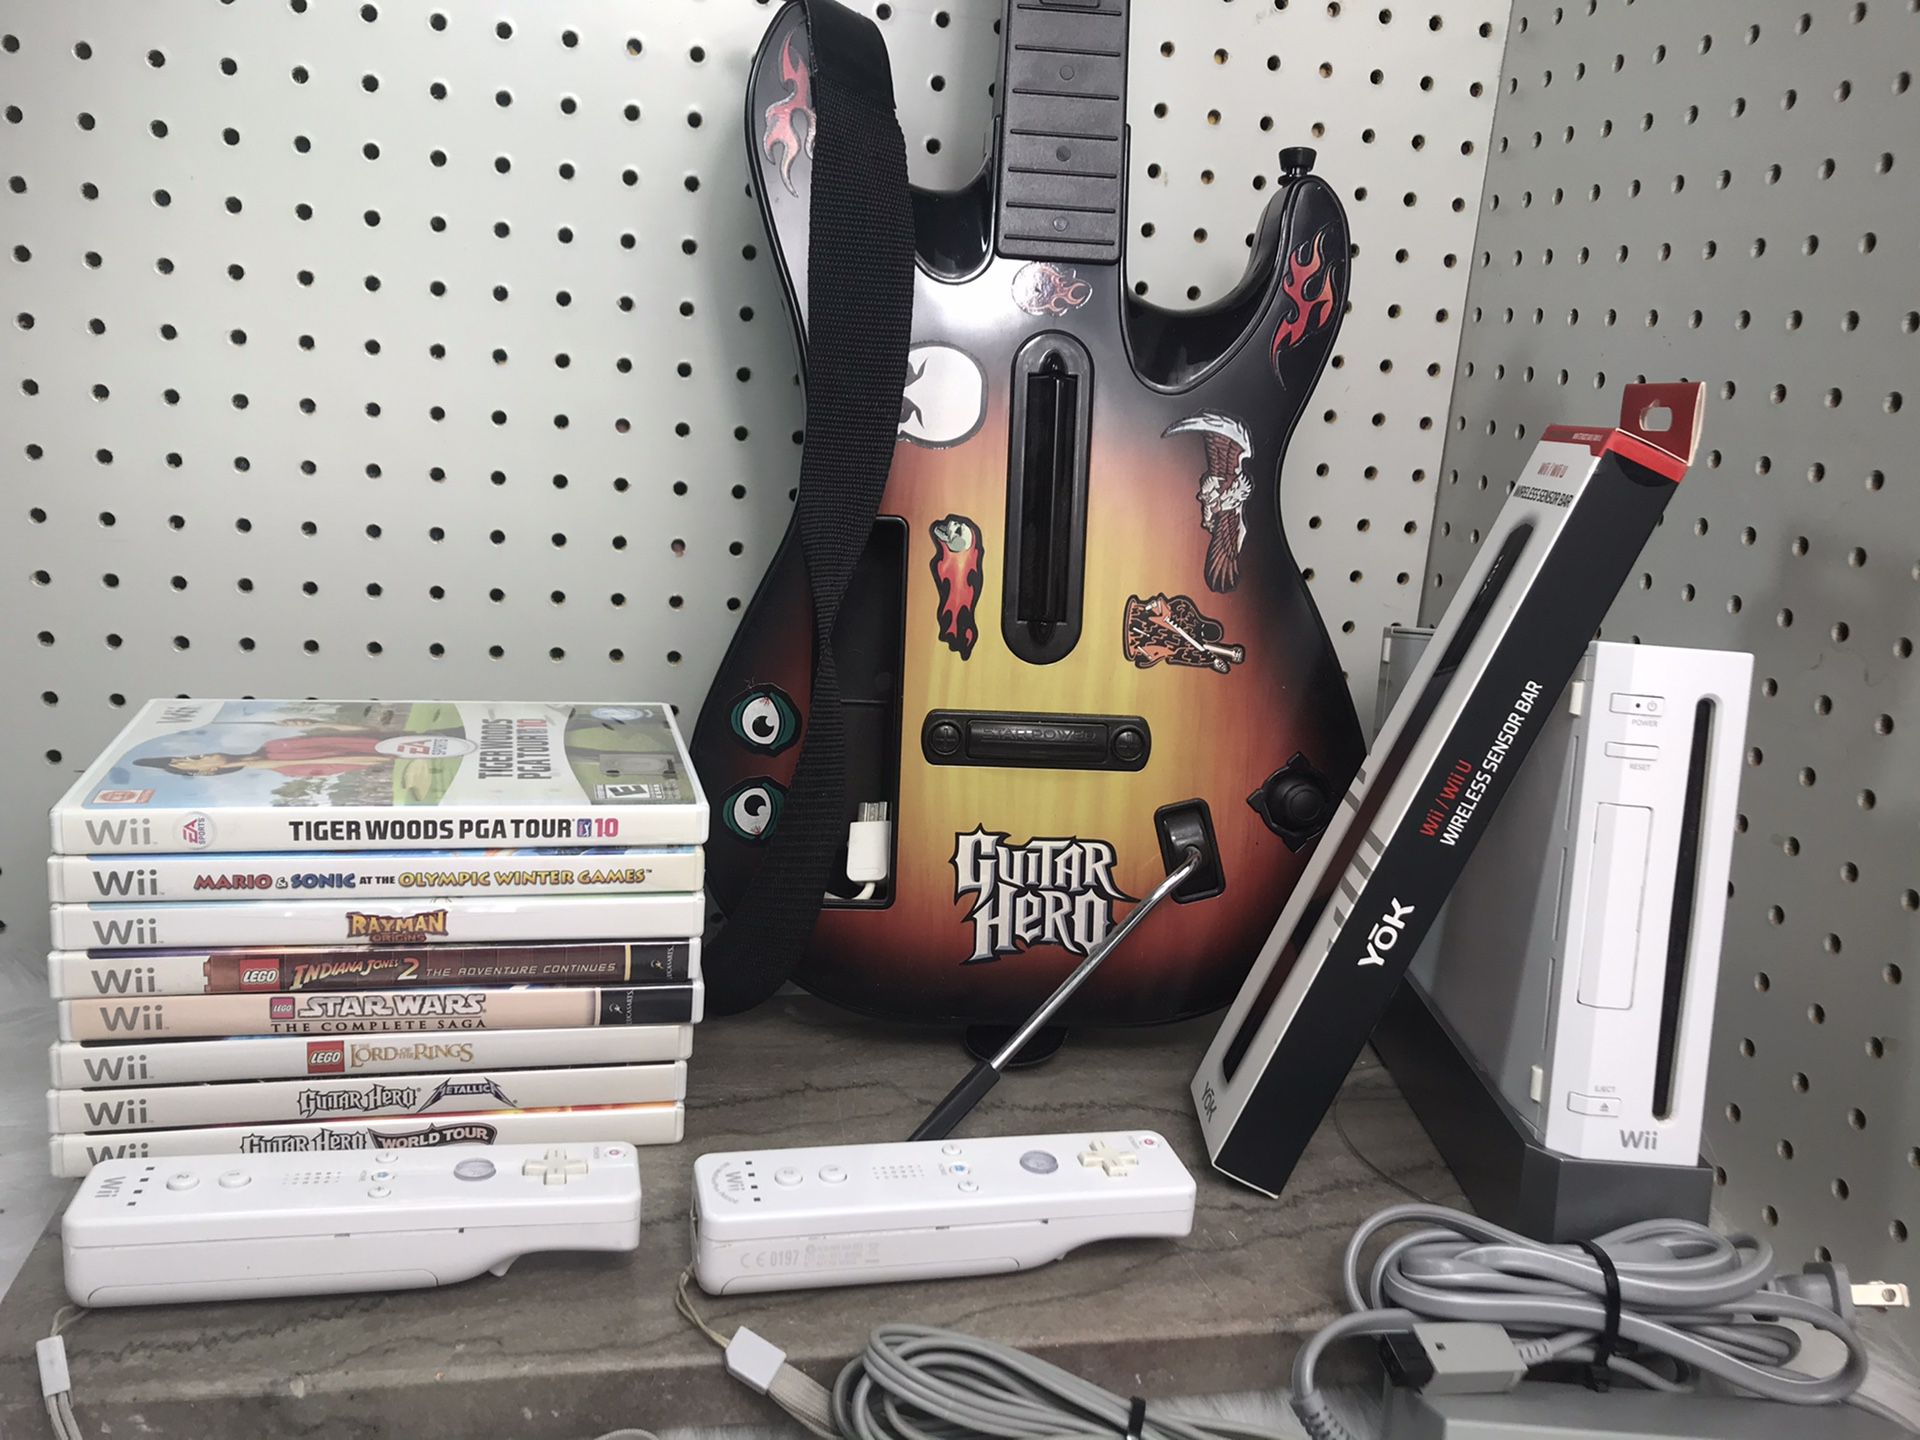 Nintendo Wii Bundle w Guitar Hero & Games